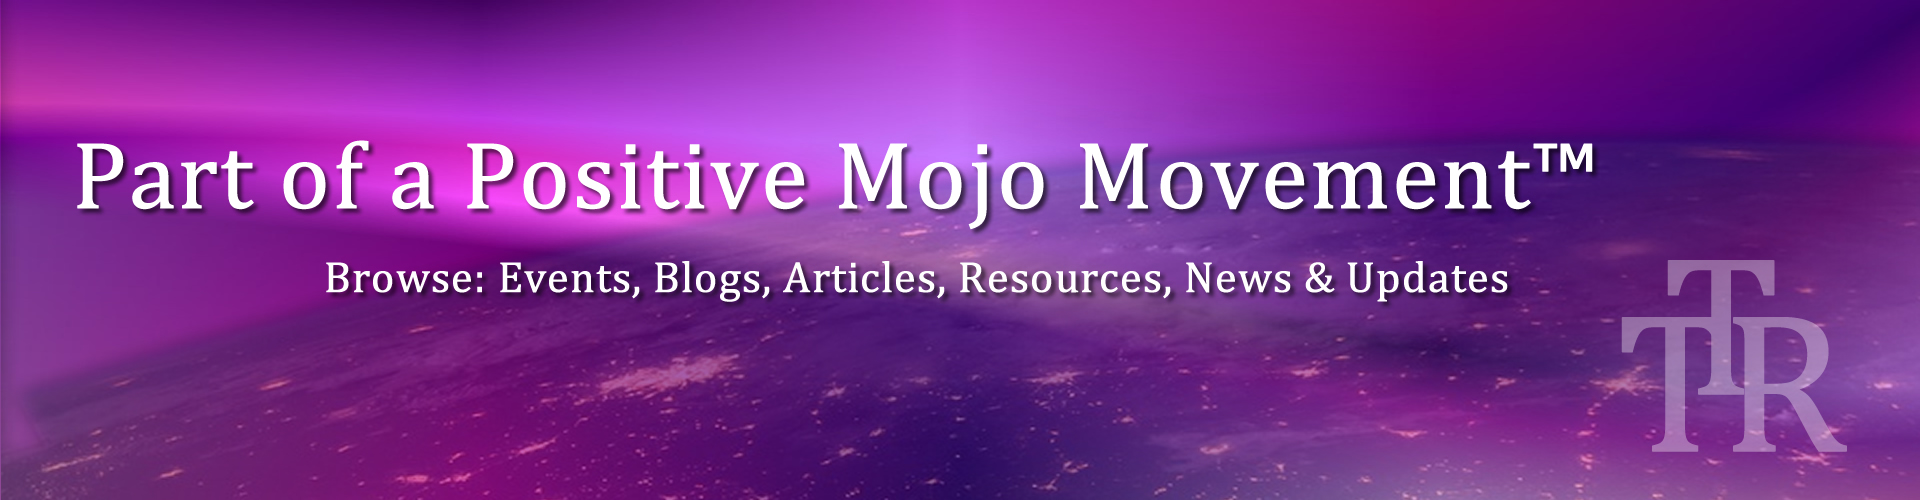 TTR Positive Mojo Movement